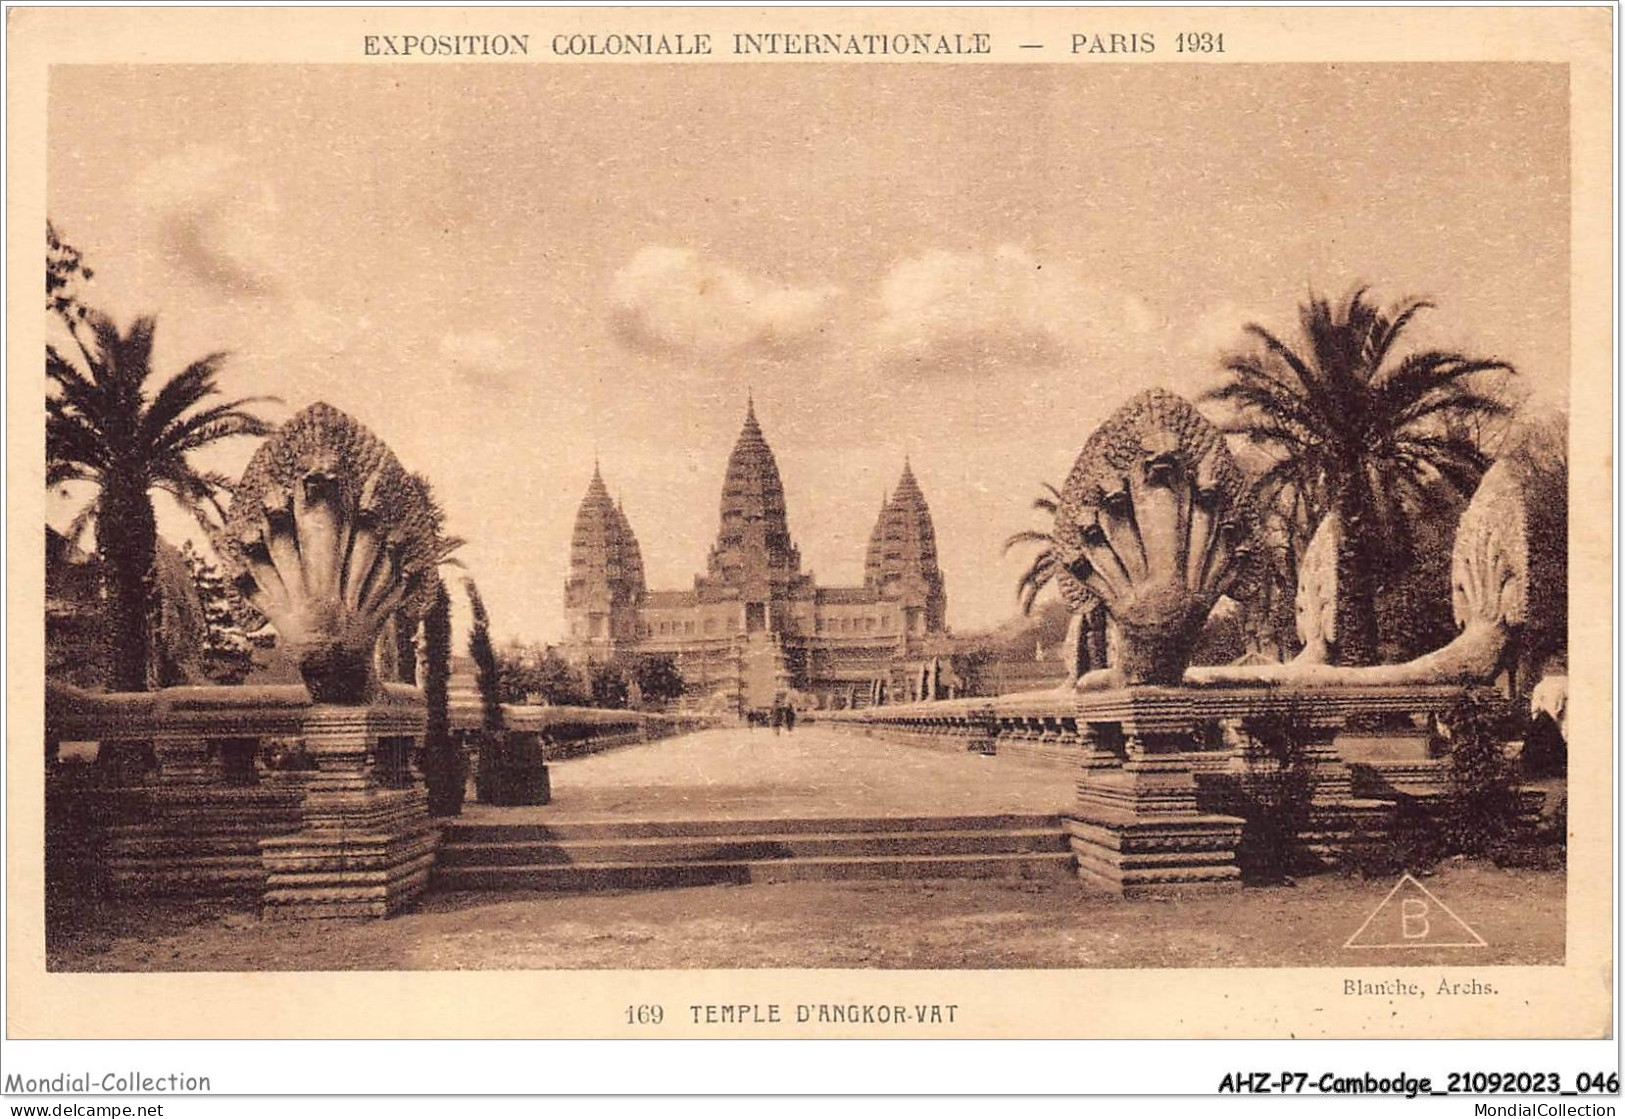 AHZP7-CAMBODGE-0619 - EXPOSITION COLONIALE INTERNATIONALE - PARIS 1931 - TEMPLE D'ANGKOR-VAT - Kambodscha